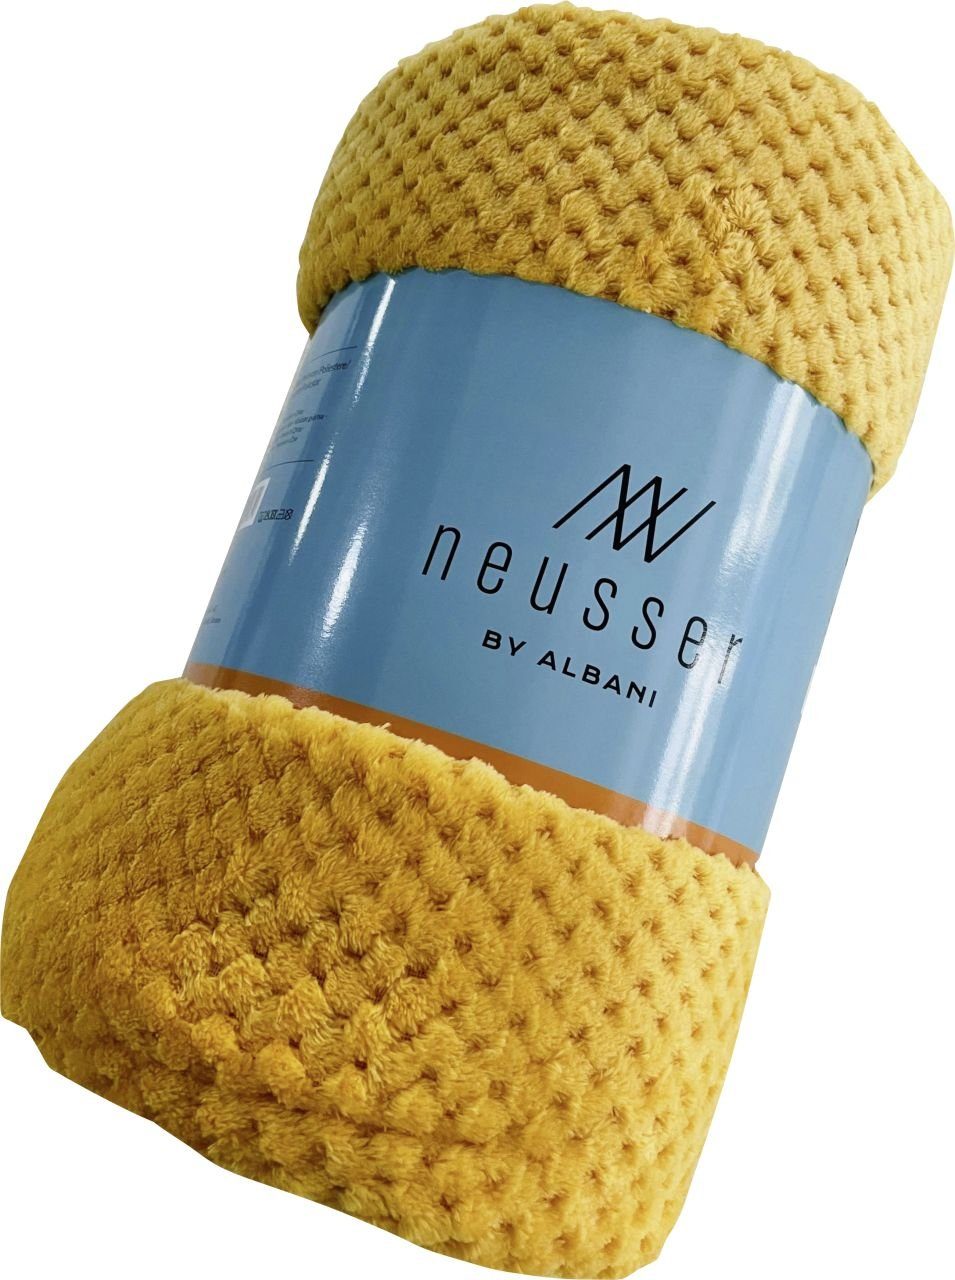 Neusser Vivian 220 Neusser Wolldecke Collection Decke gelb, 200 cm, x Collection